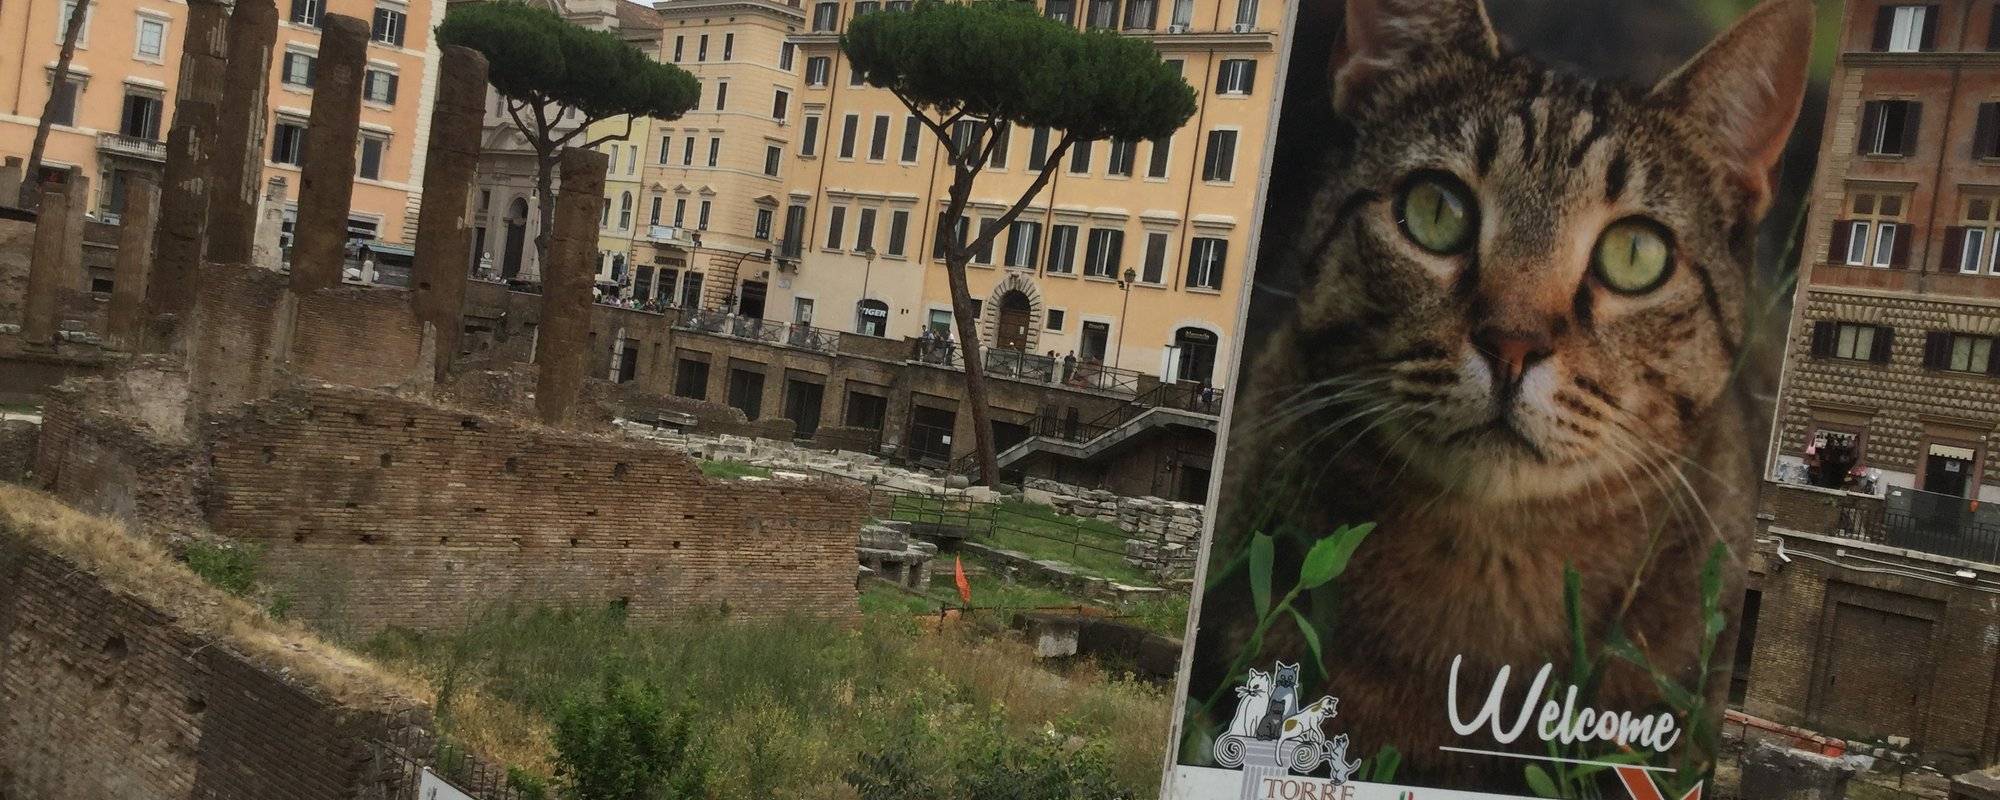 TRAVELMAN ROME, ITALY: Cat Sanctuary Among Roman Ruins